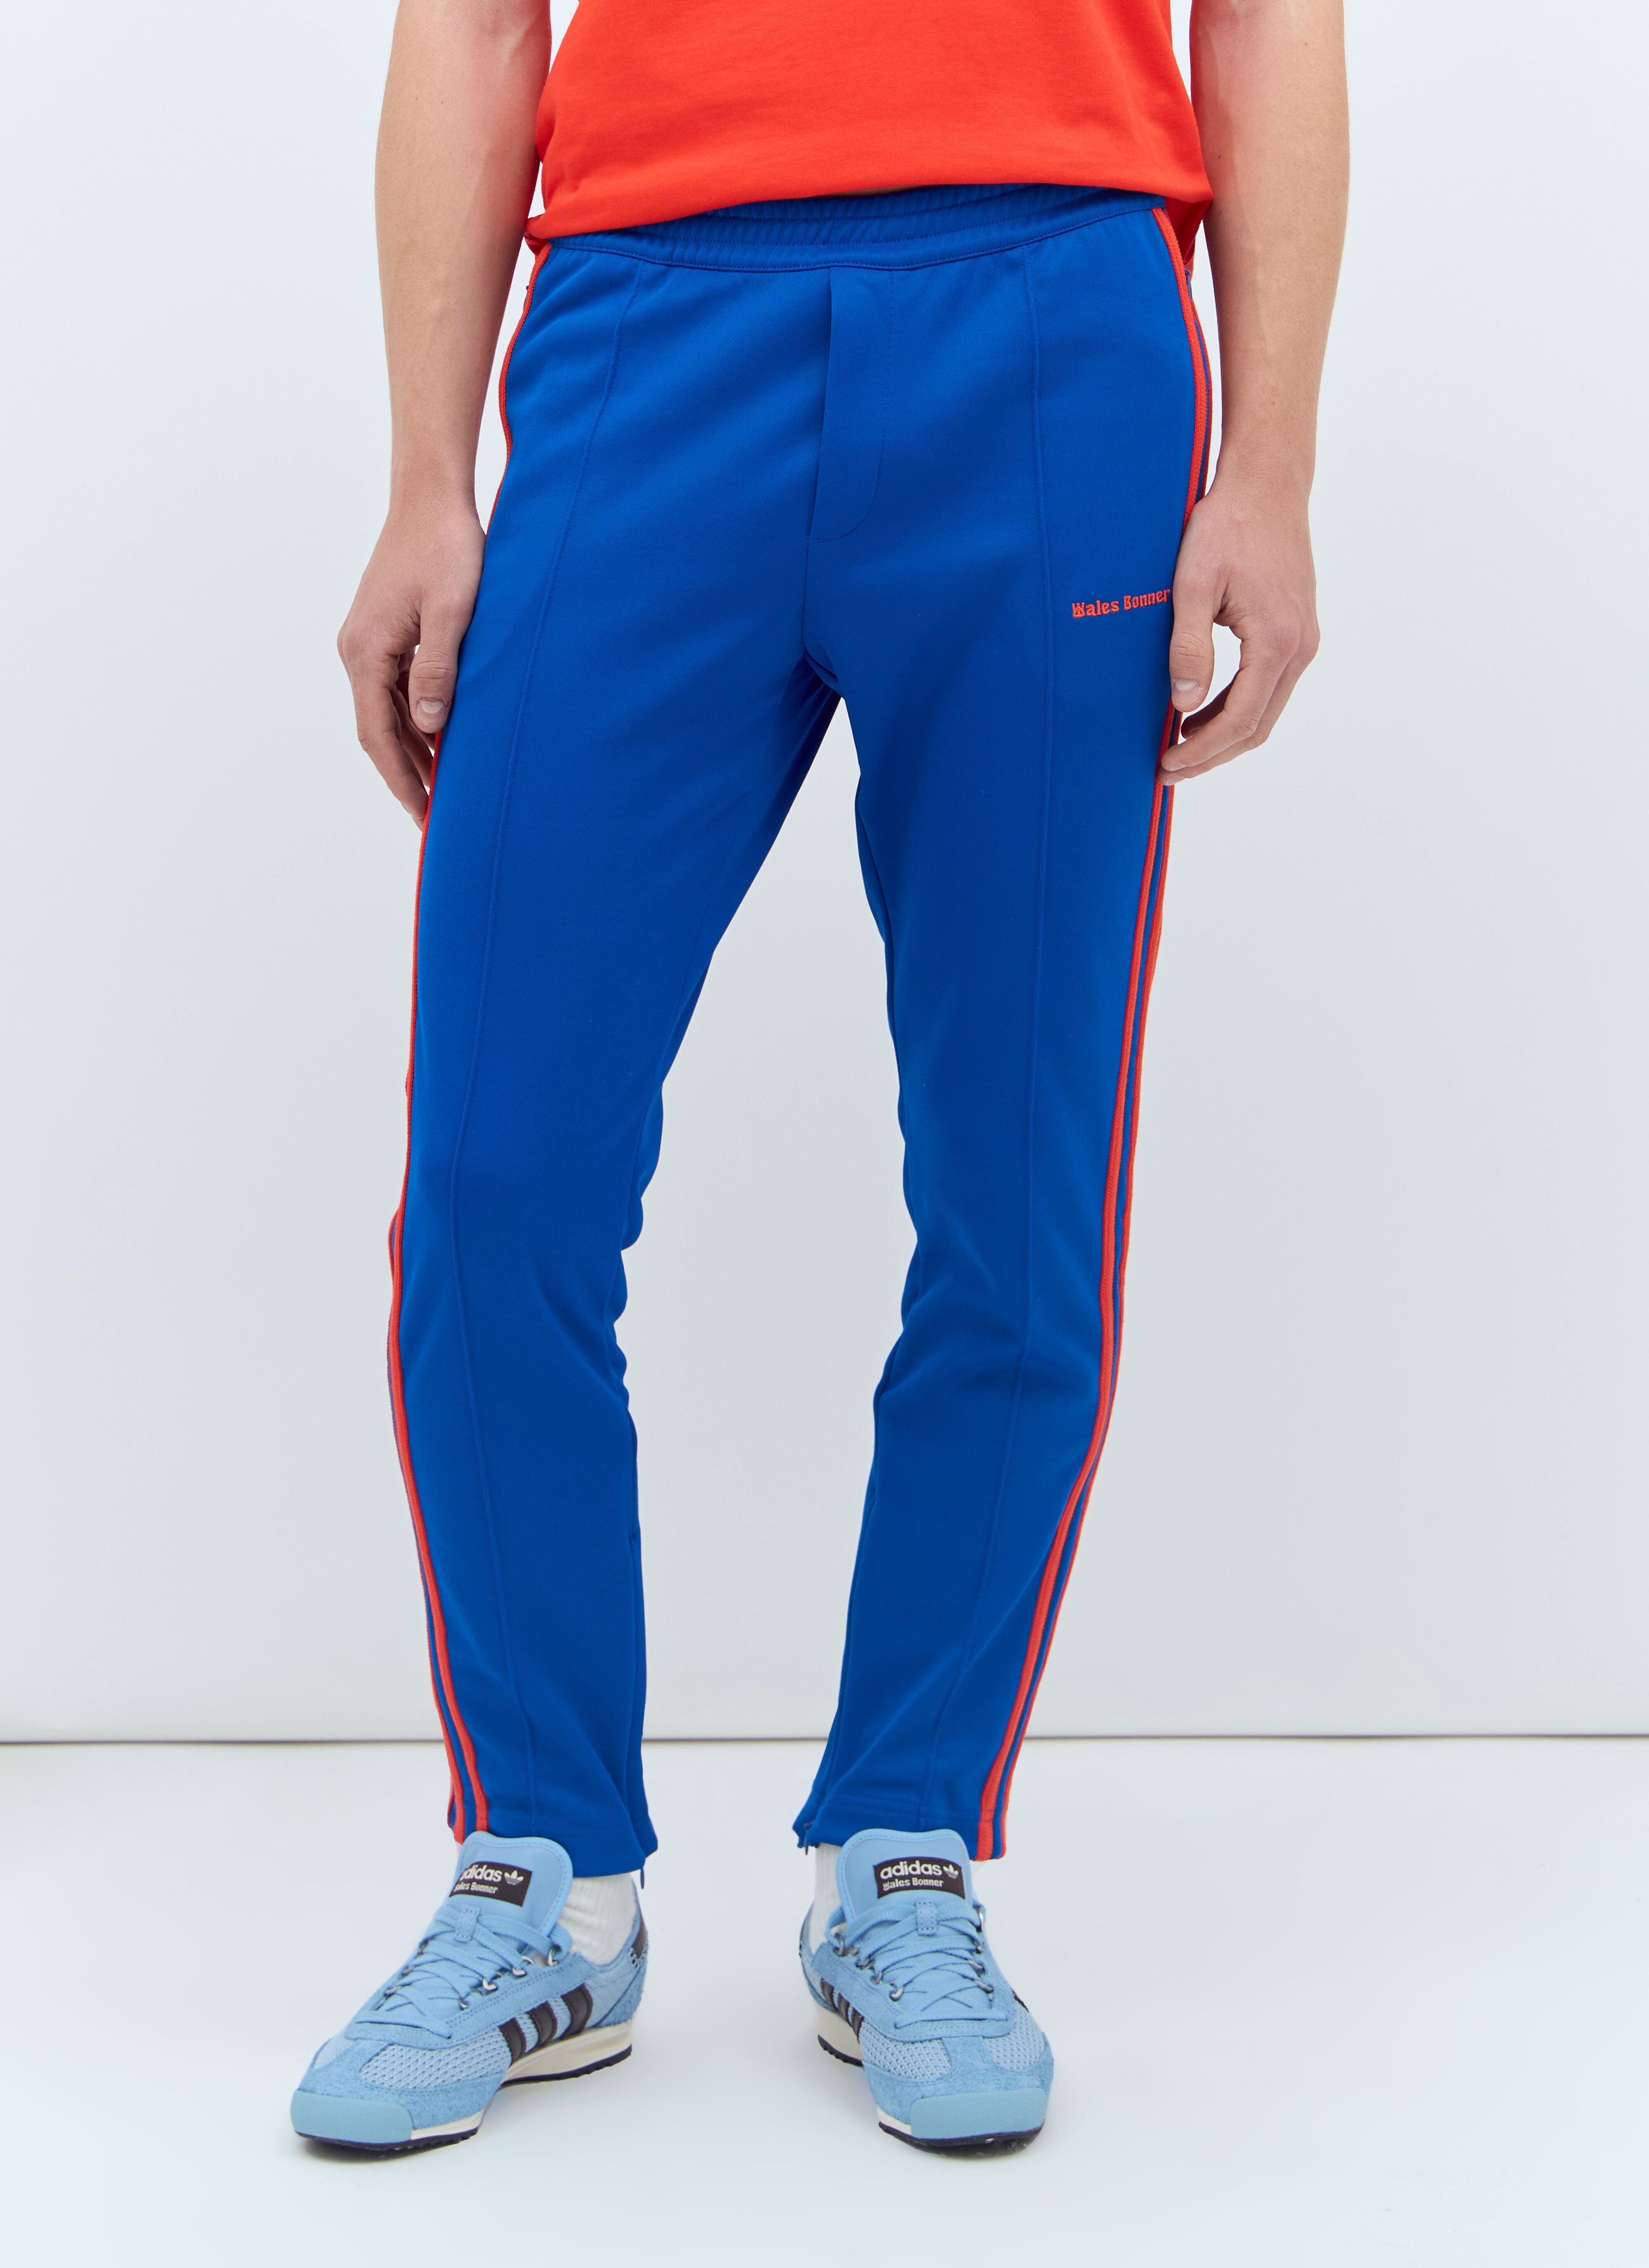 adidas by Wales Bonner Stirrup Track Pants Blue awb0357015